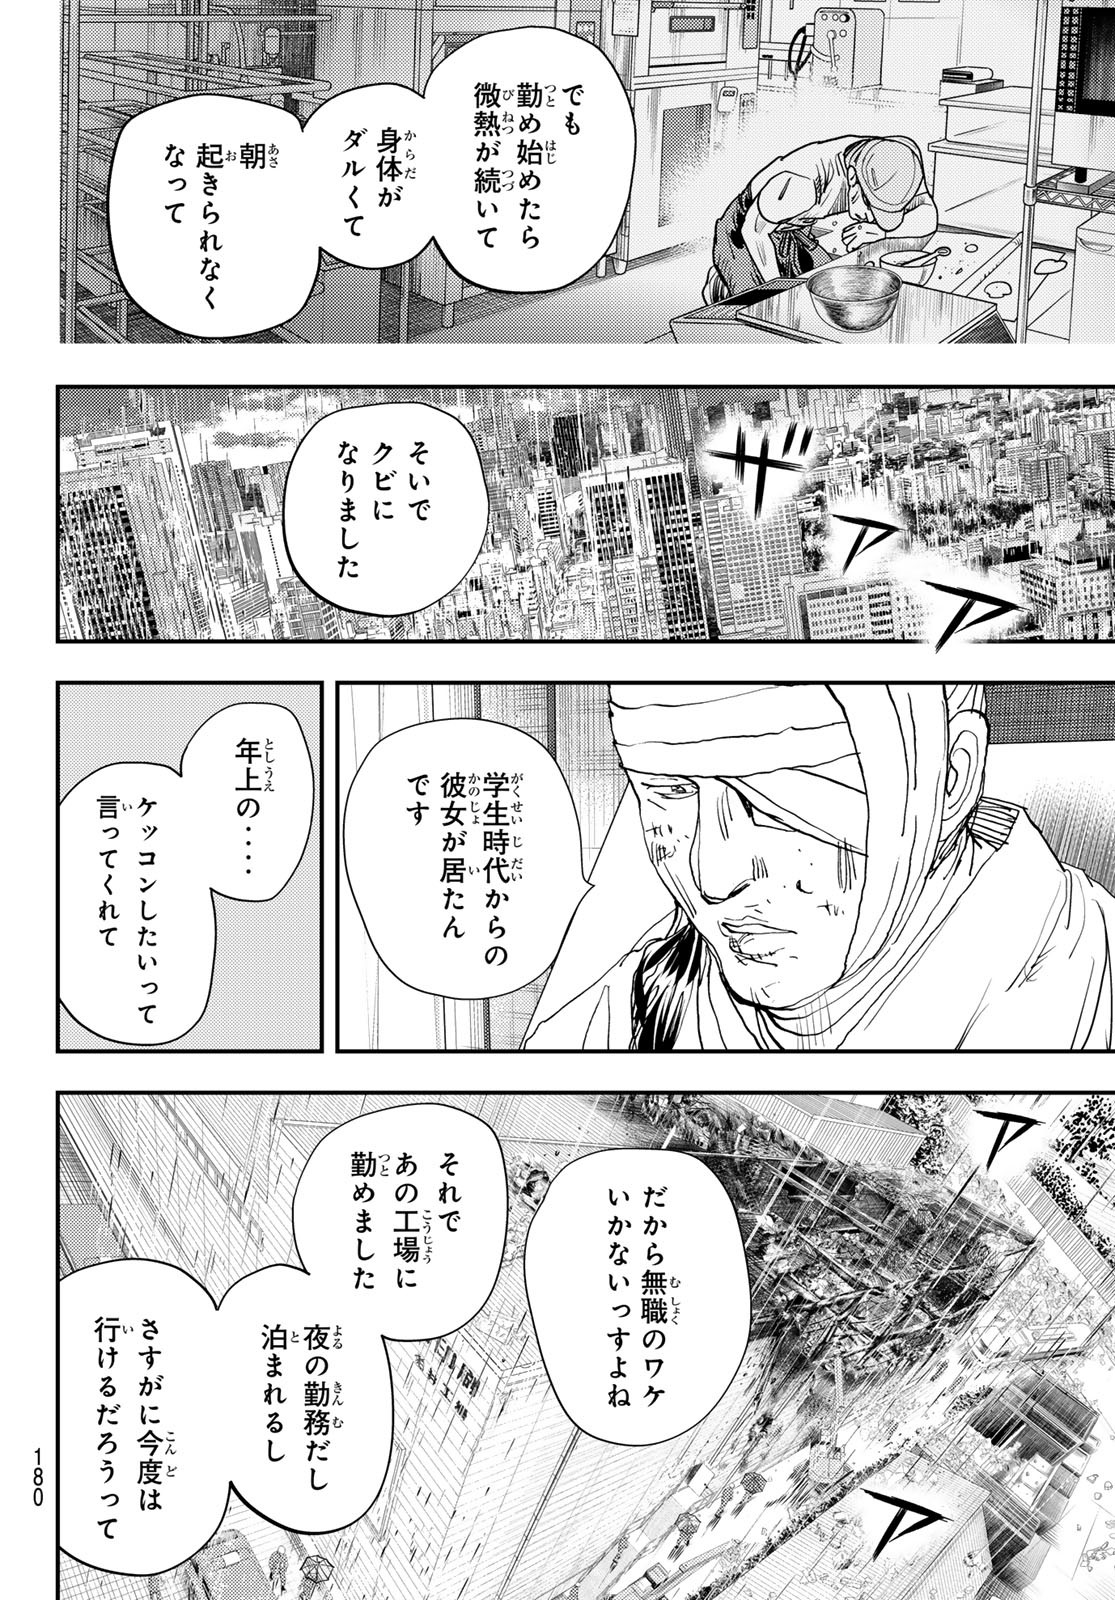 Megumi no Daigo - Chapter 33 - Page 2